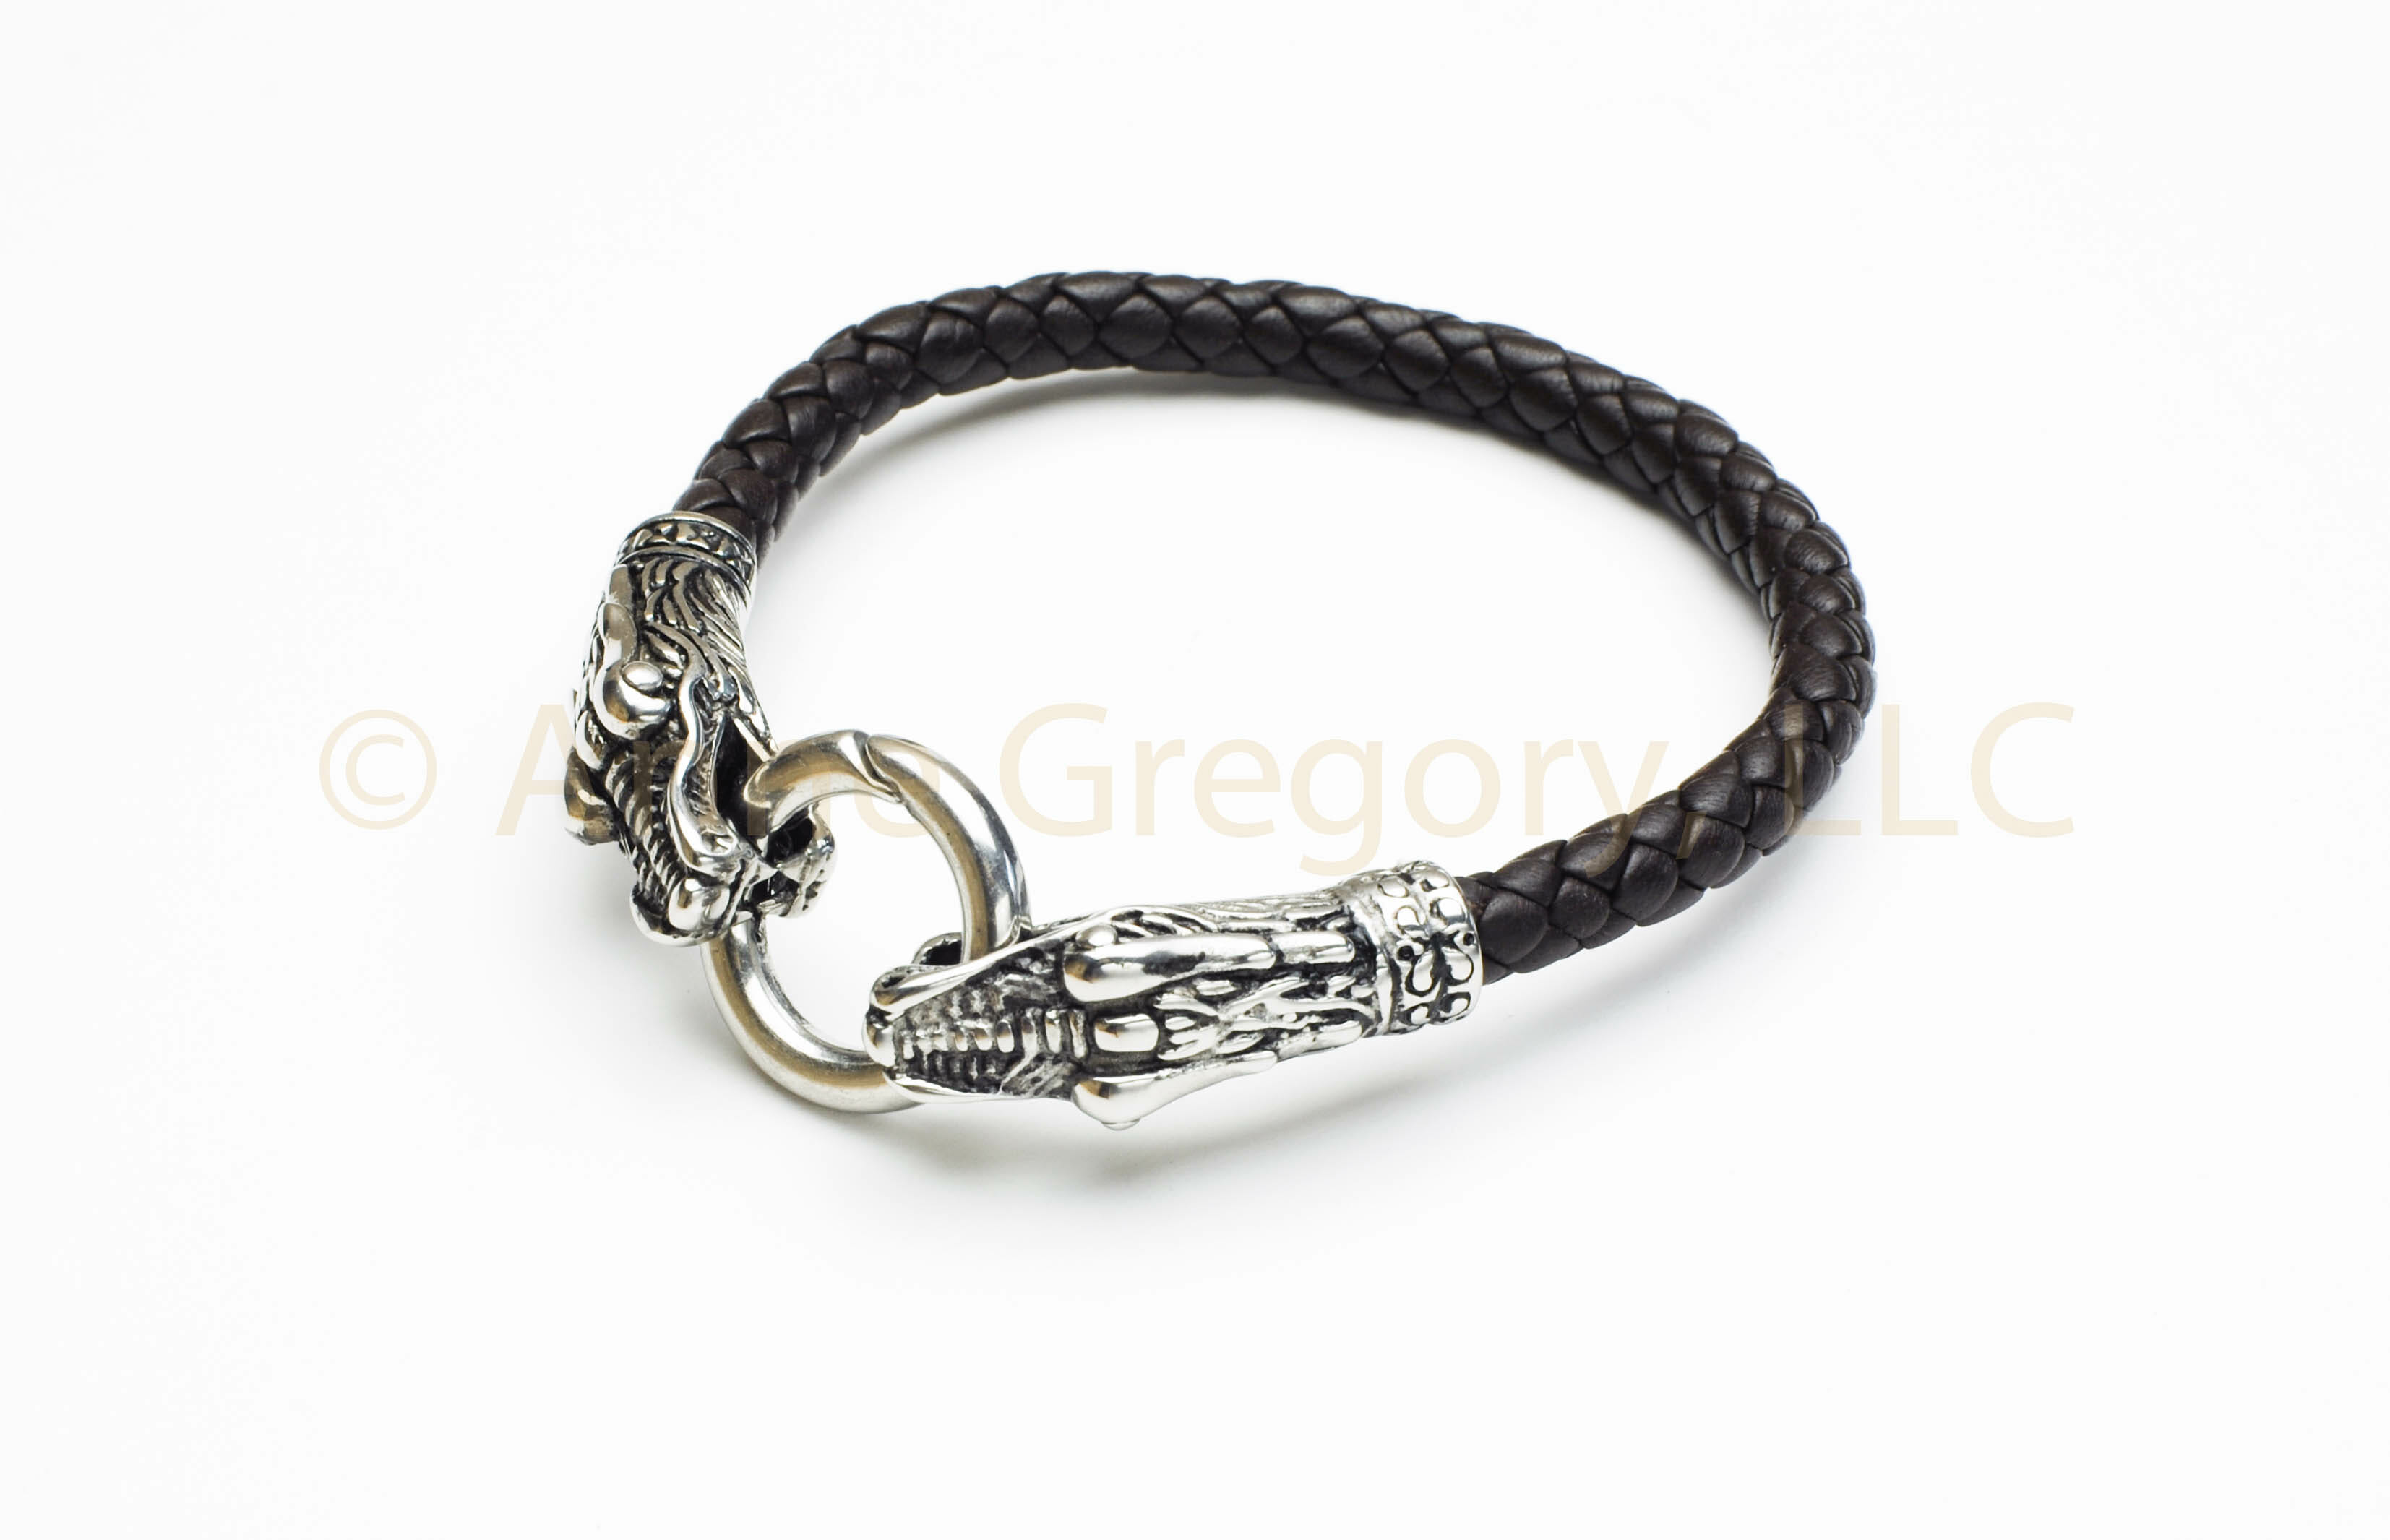 Greyhound Sterling Silver Charm on Black Cord Leather Bracelet